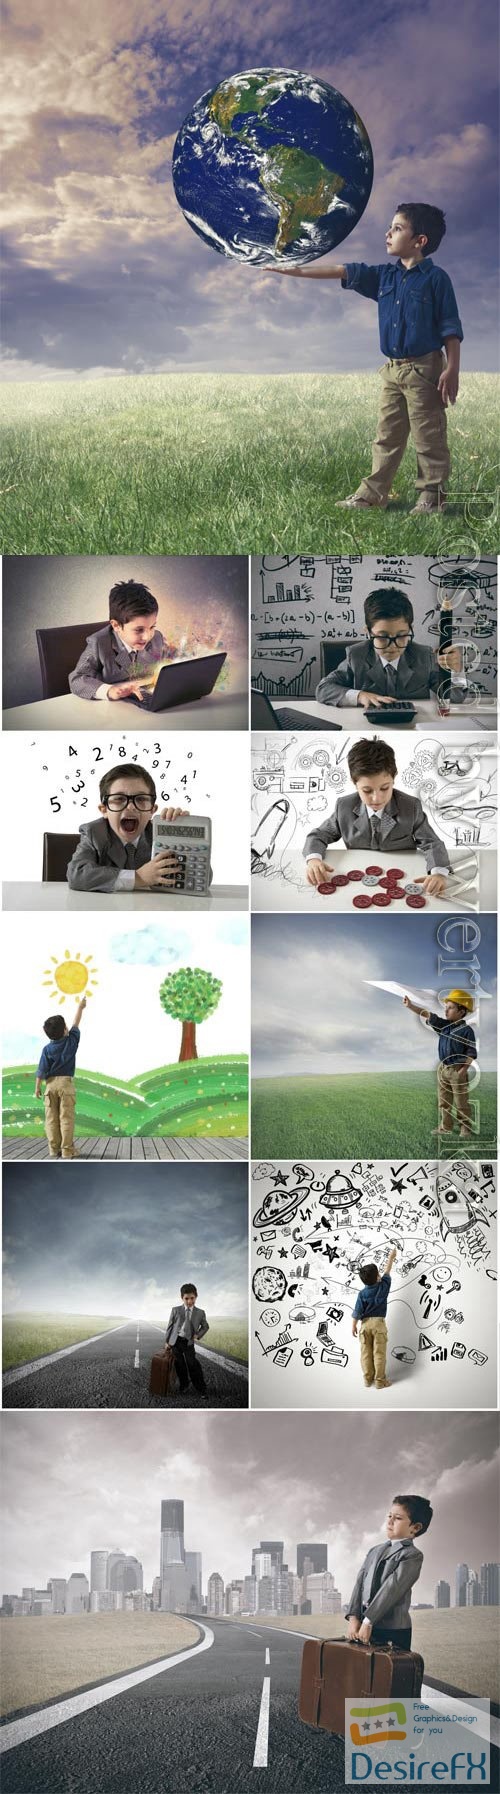 Little boy and creative ideas concept stock photo